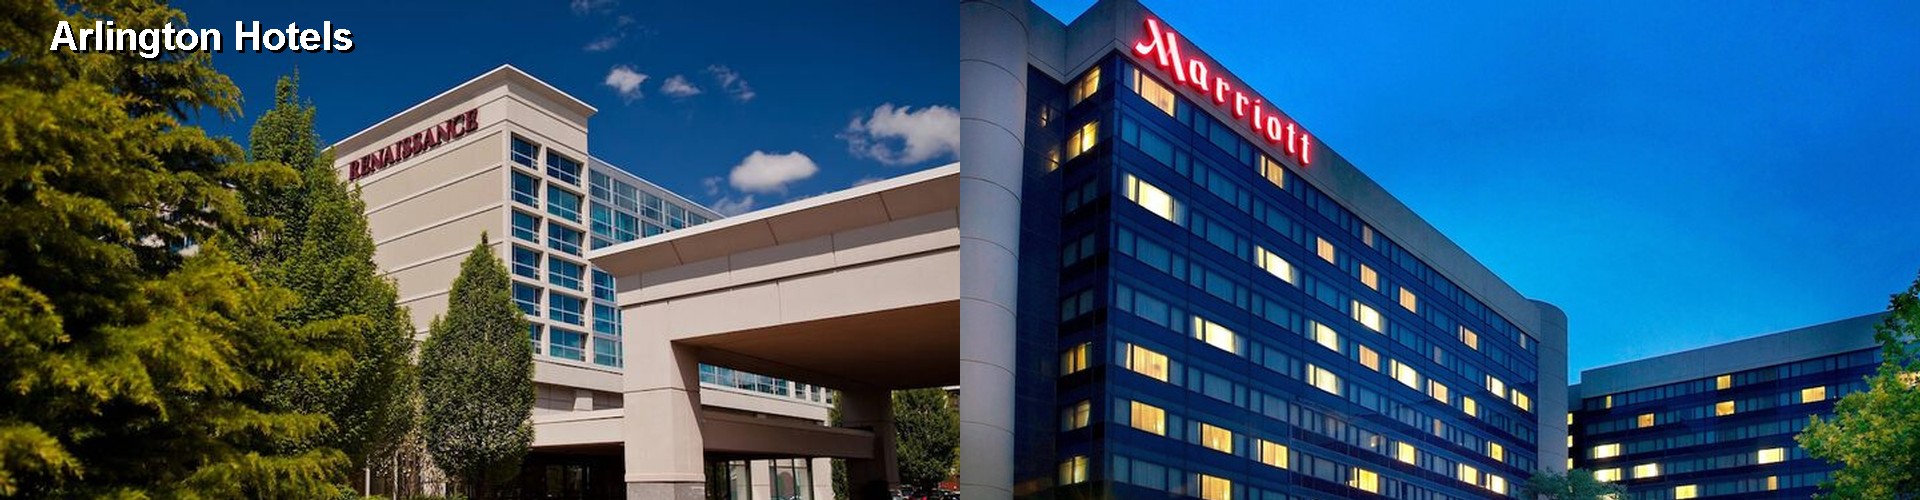 5 Best Hotels near Arlington